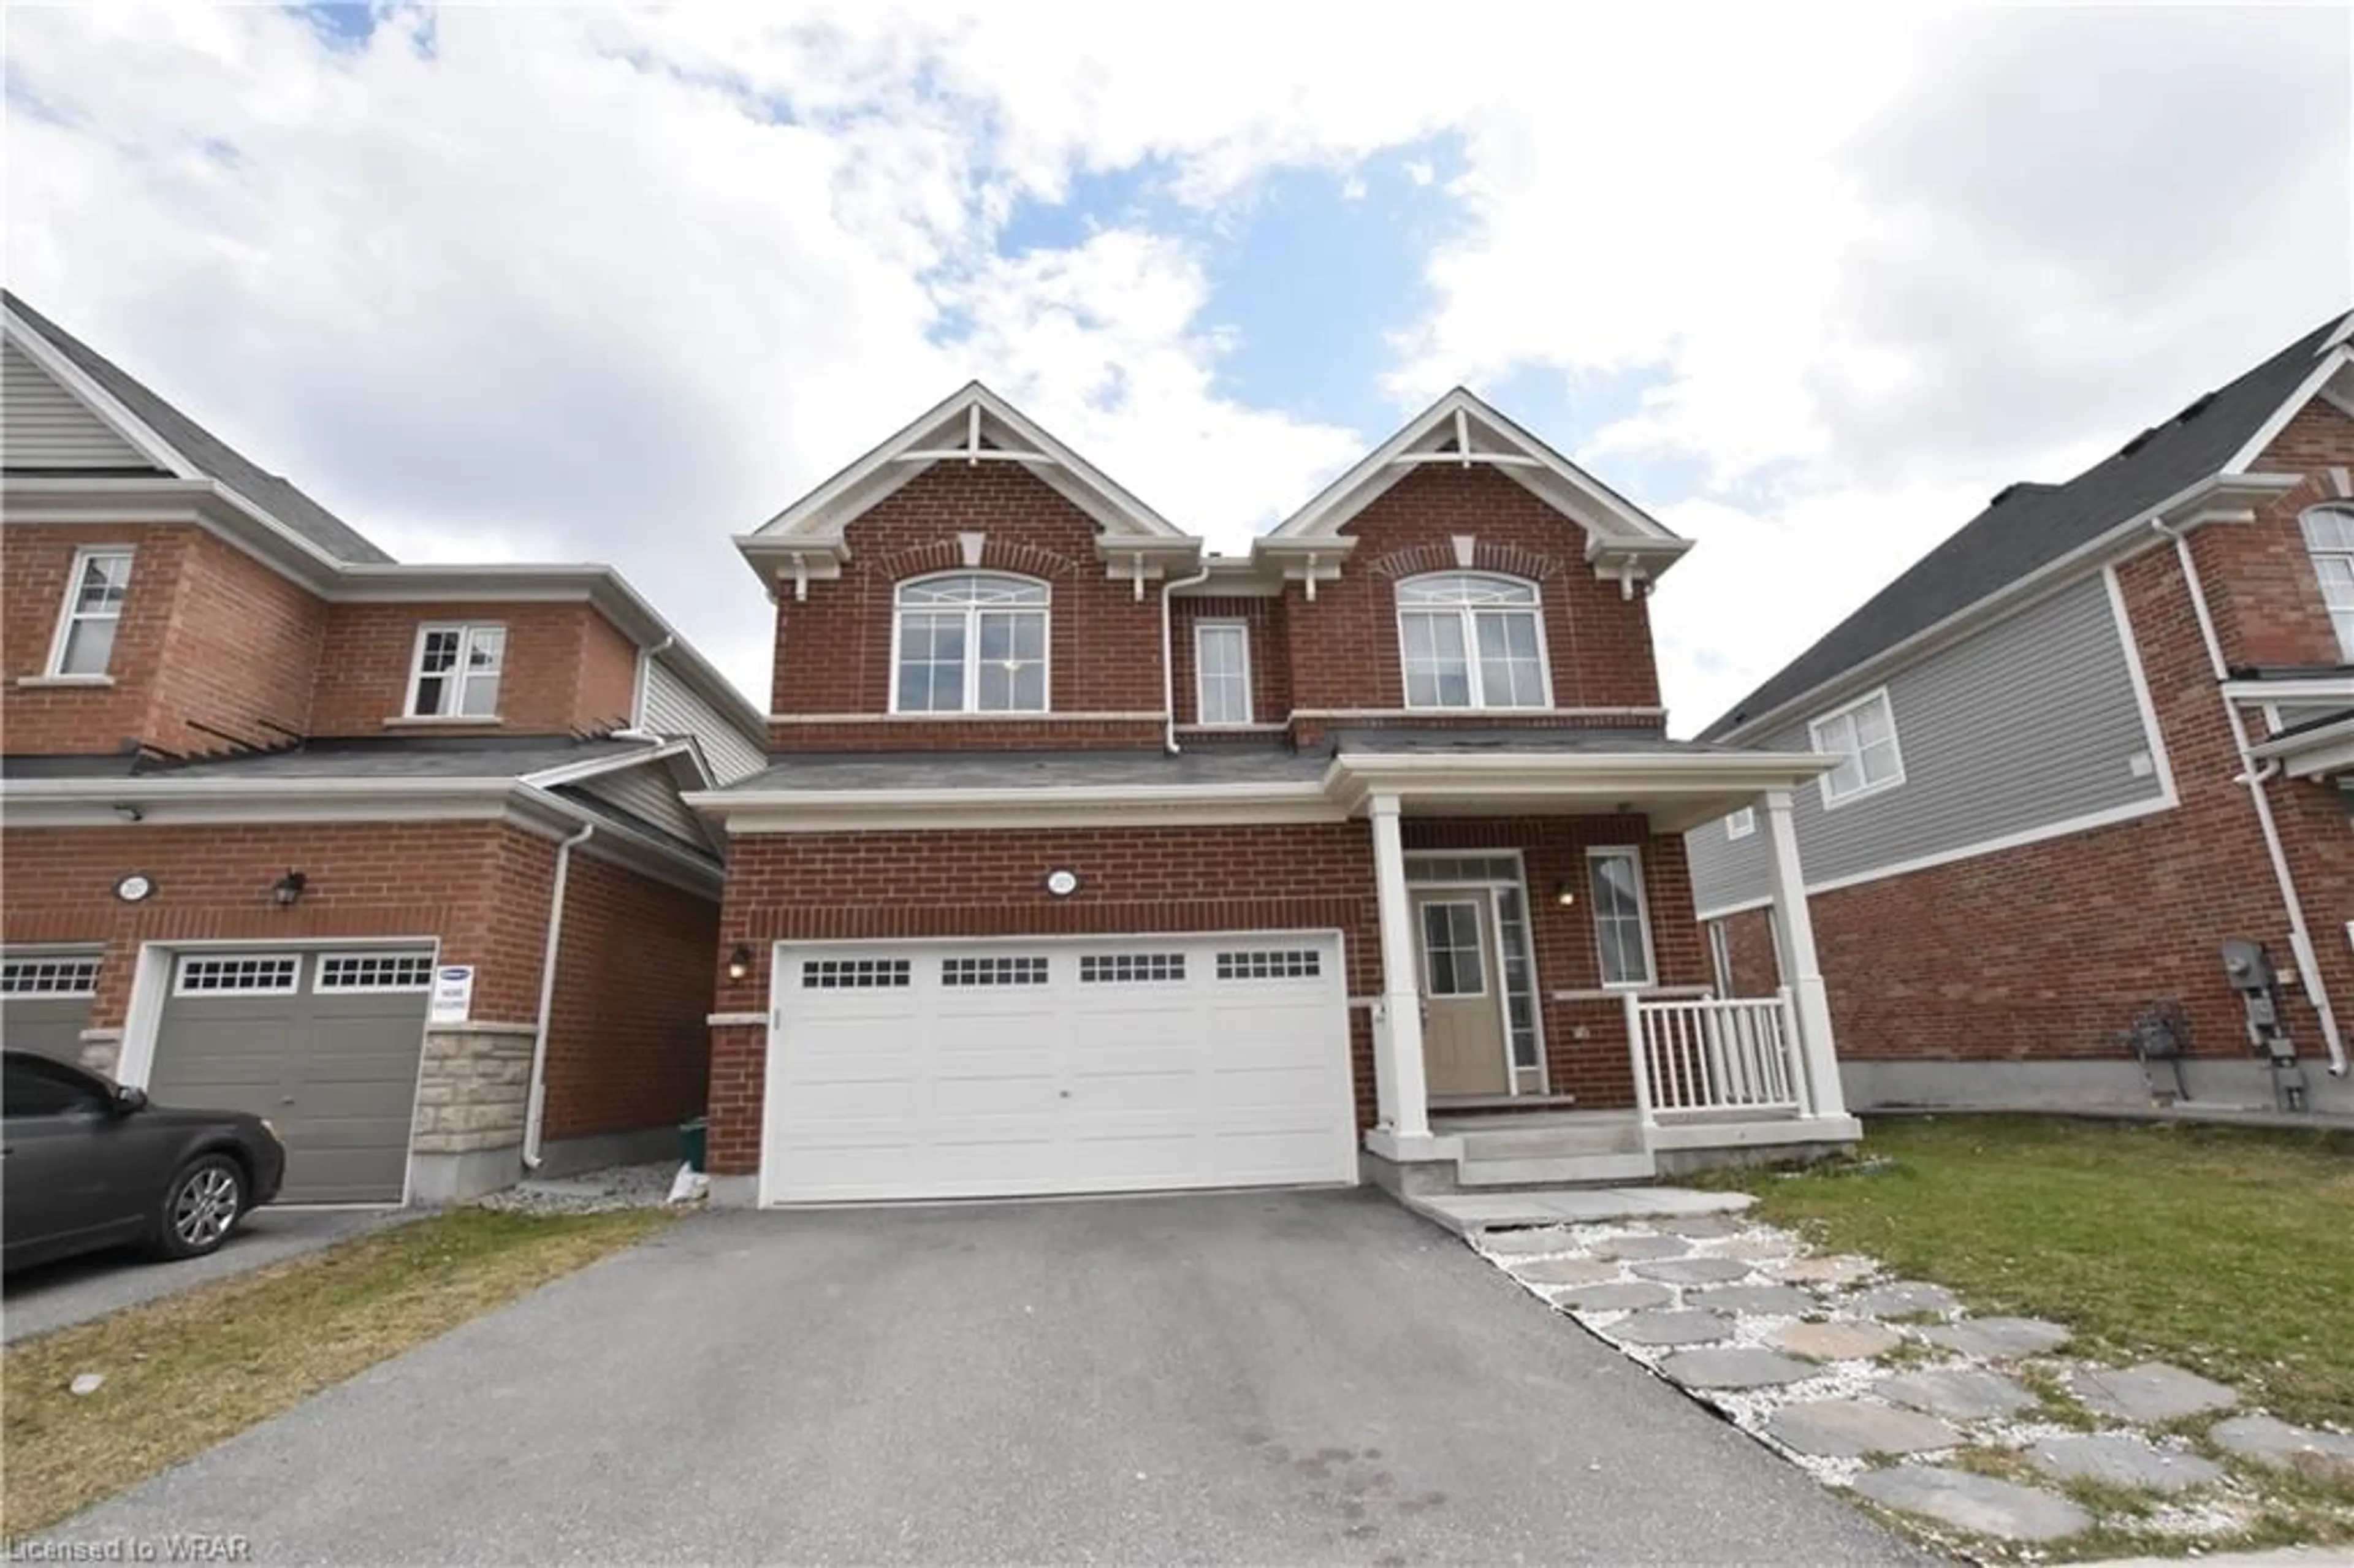 Home with brick exterior material for 203 Ridge Rd, Cambridge Ontario N3E 0C3